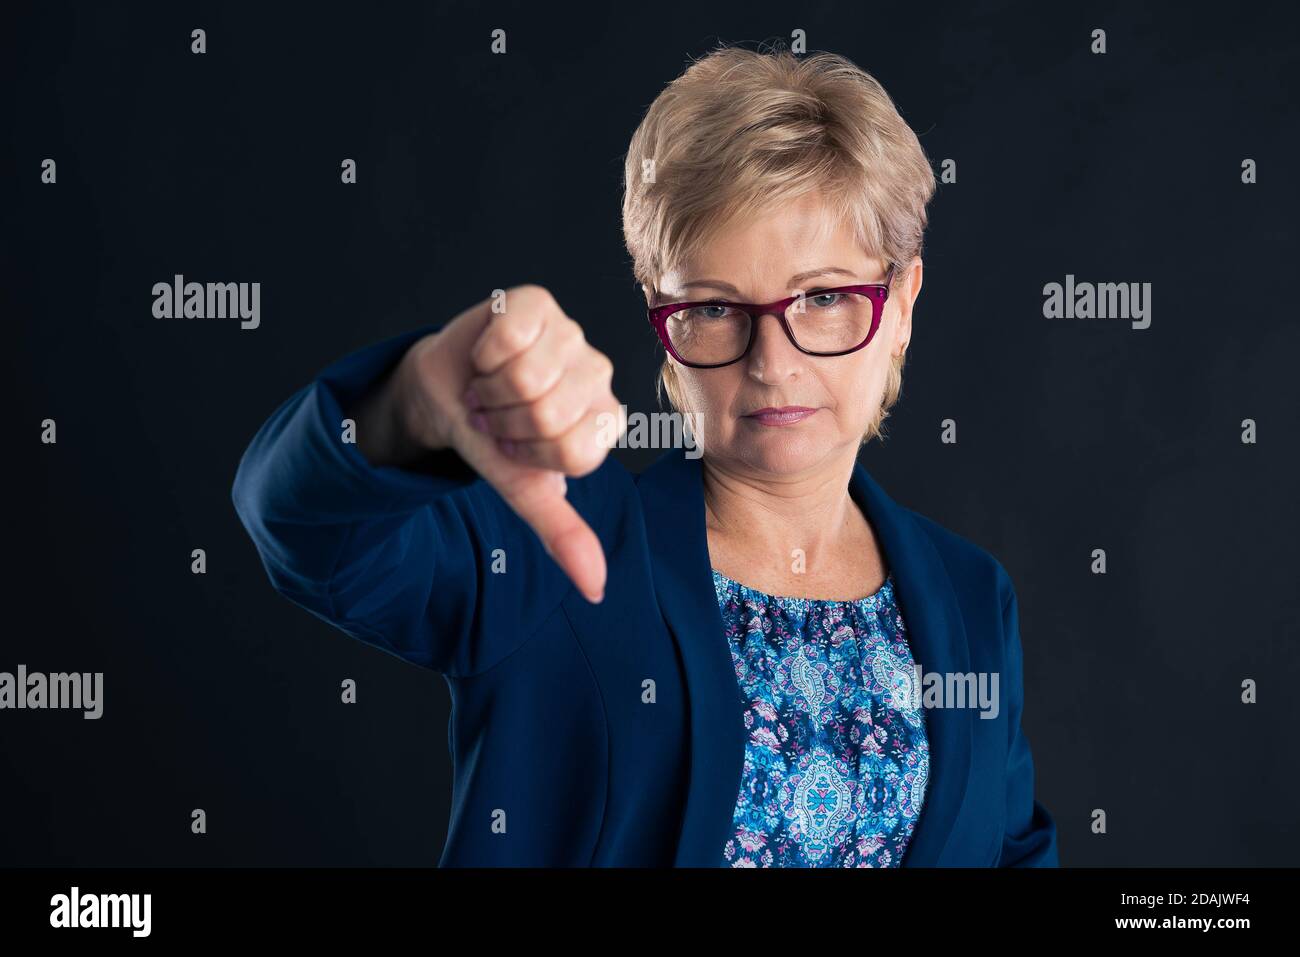 Upset older secretary showing dislike sign on dark background wearing magenta glasees Stock Photo